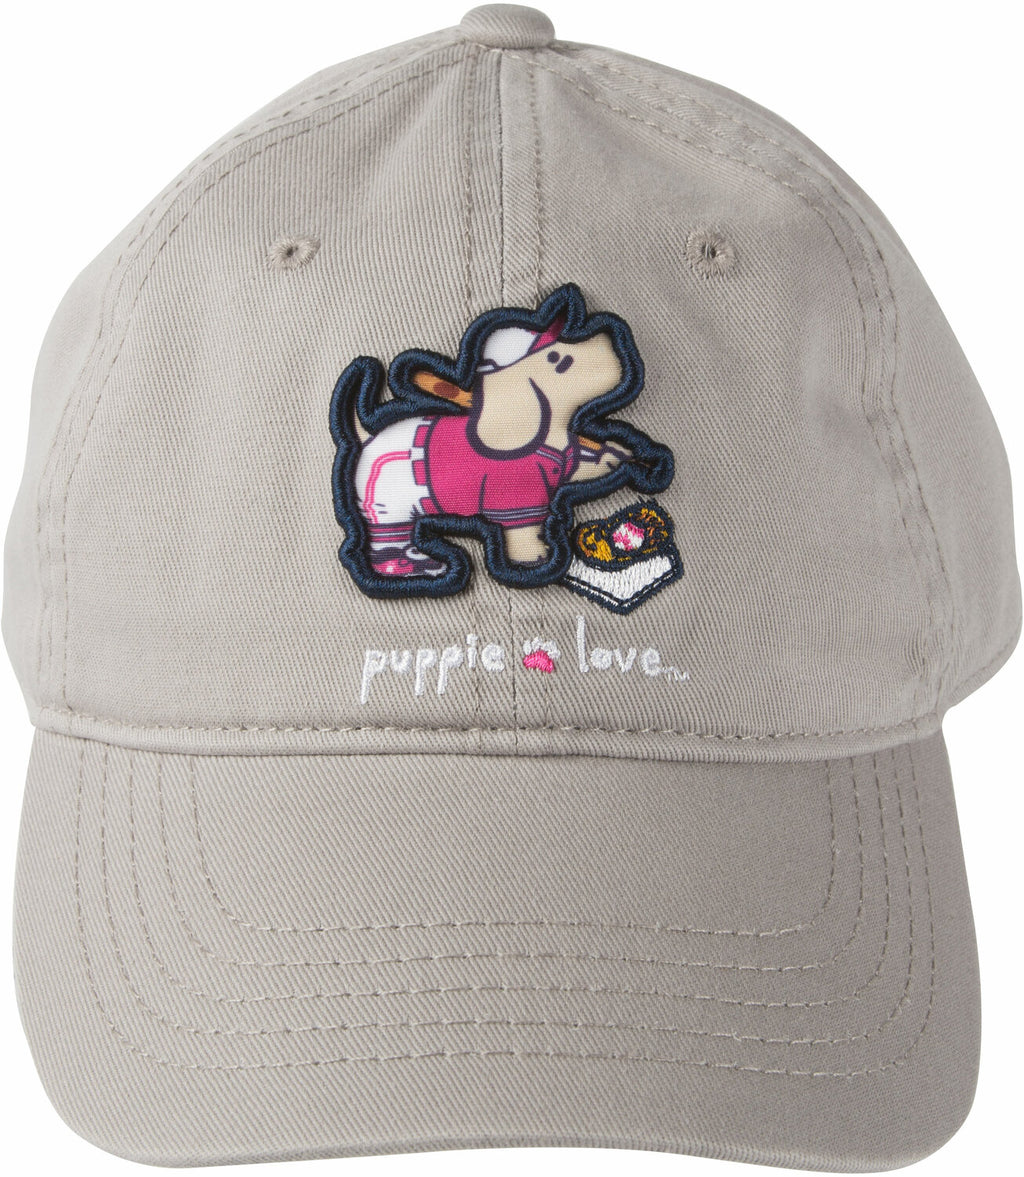 SOFTBALL PUP HAT - Puppie Love